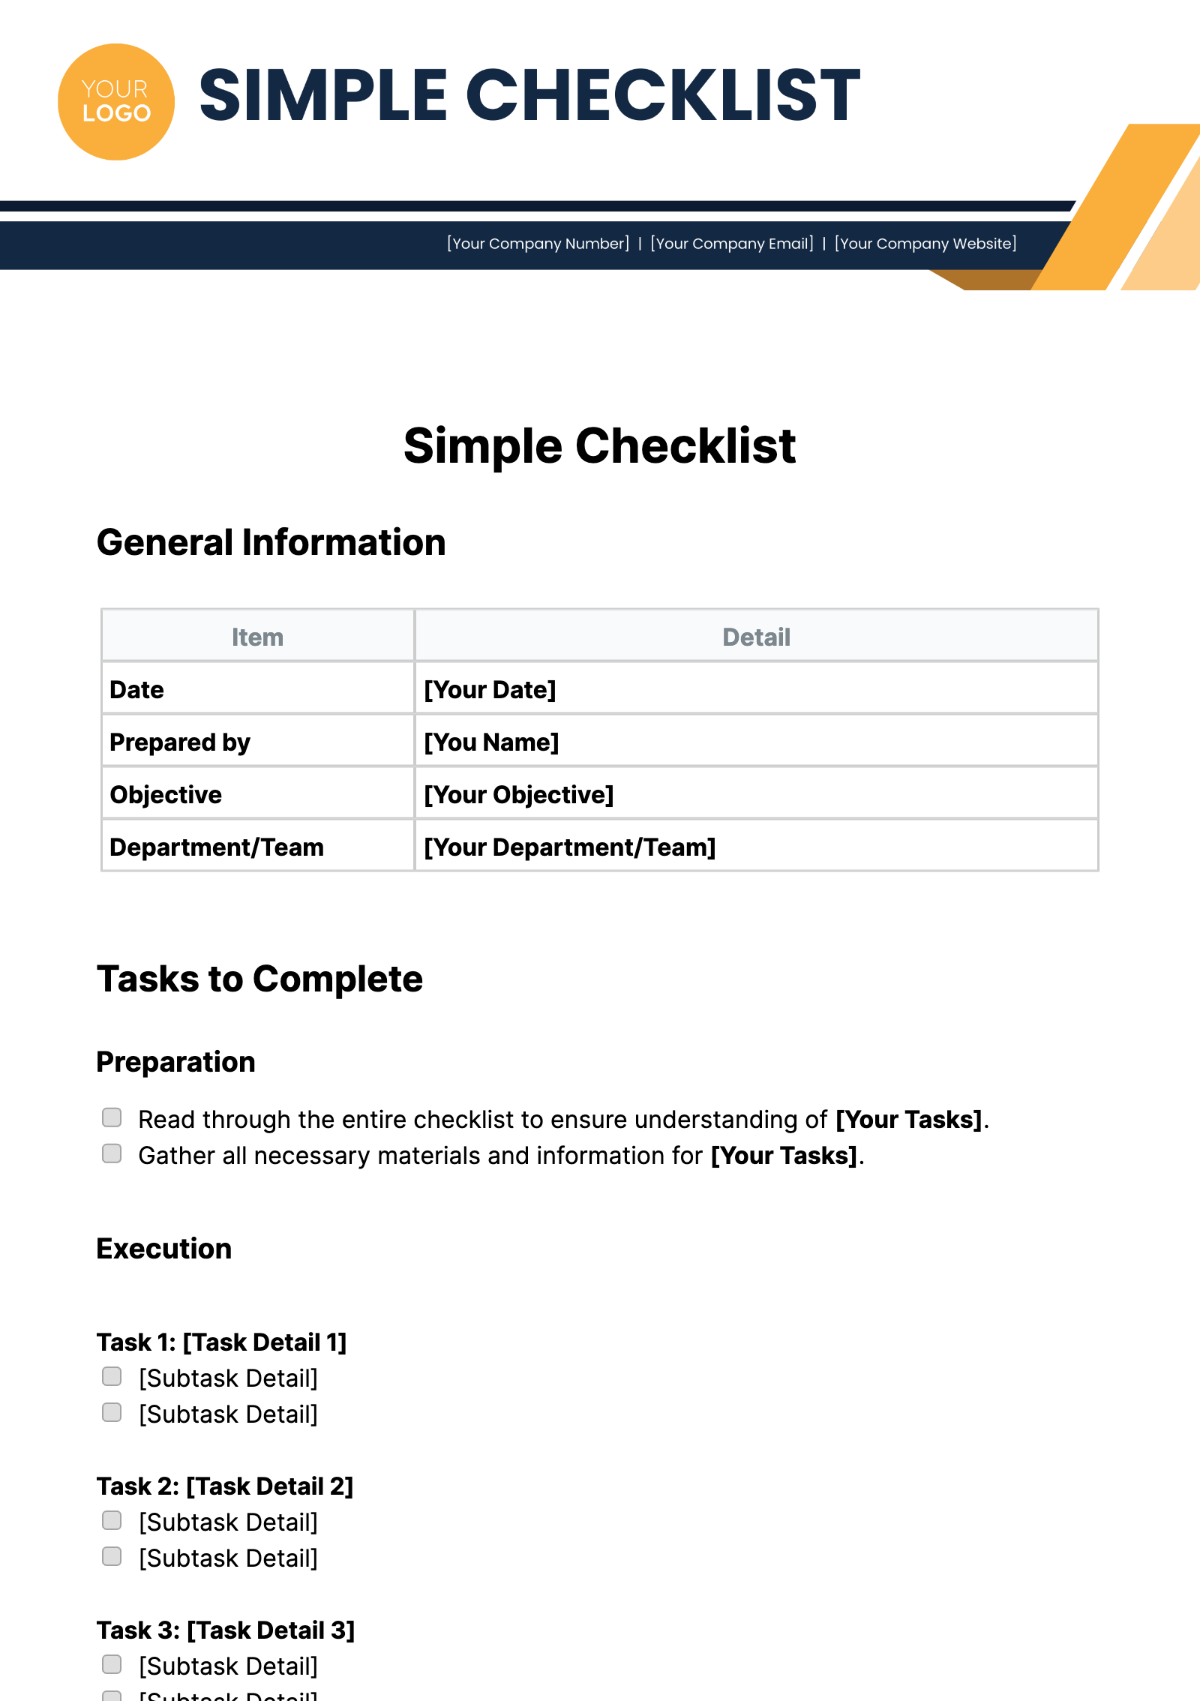 Simple Checklist Template